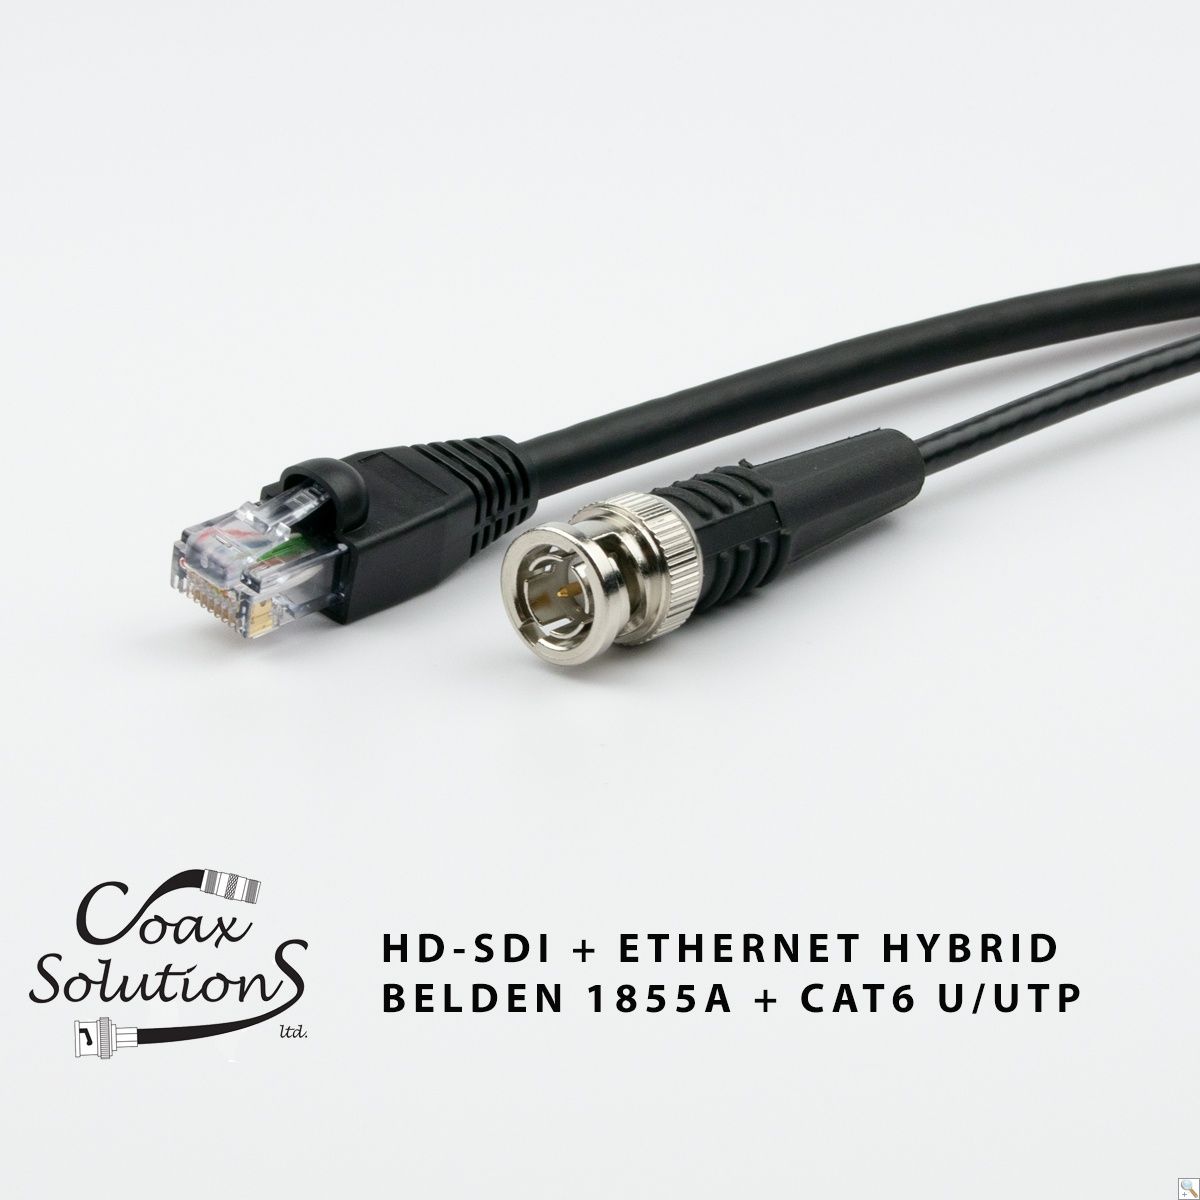 Belden 1855A + CAT6 Hybrid HD-SDI Patch Cable